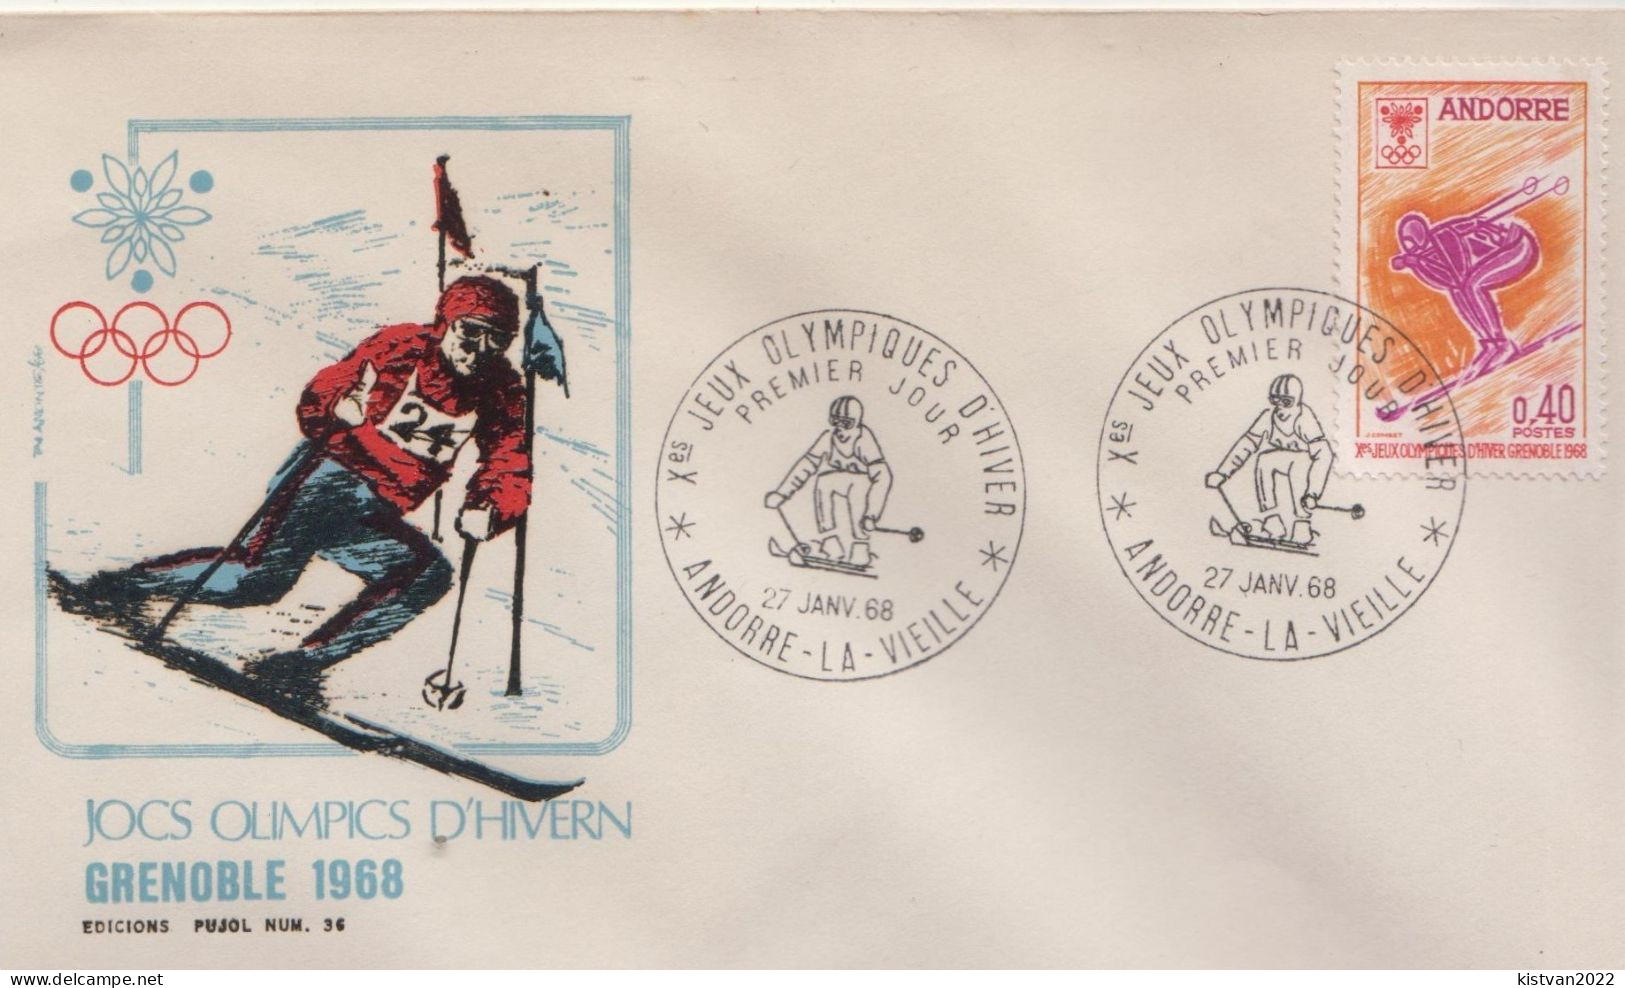 Andorra Stamp On FDC - Inverno1968: Grenoble